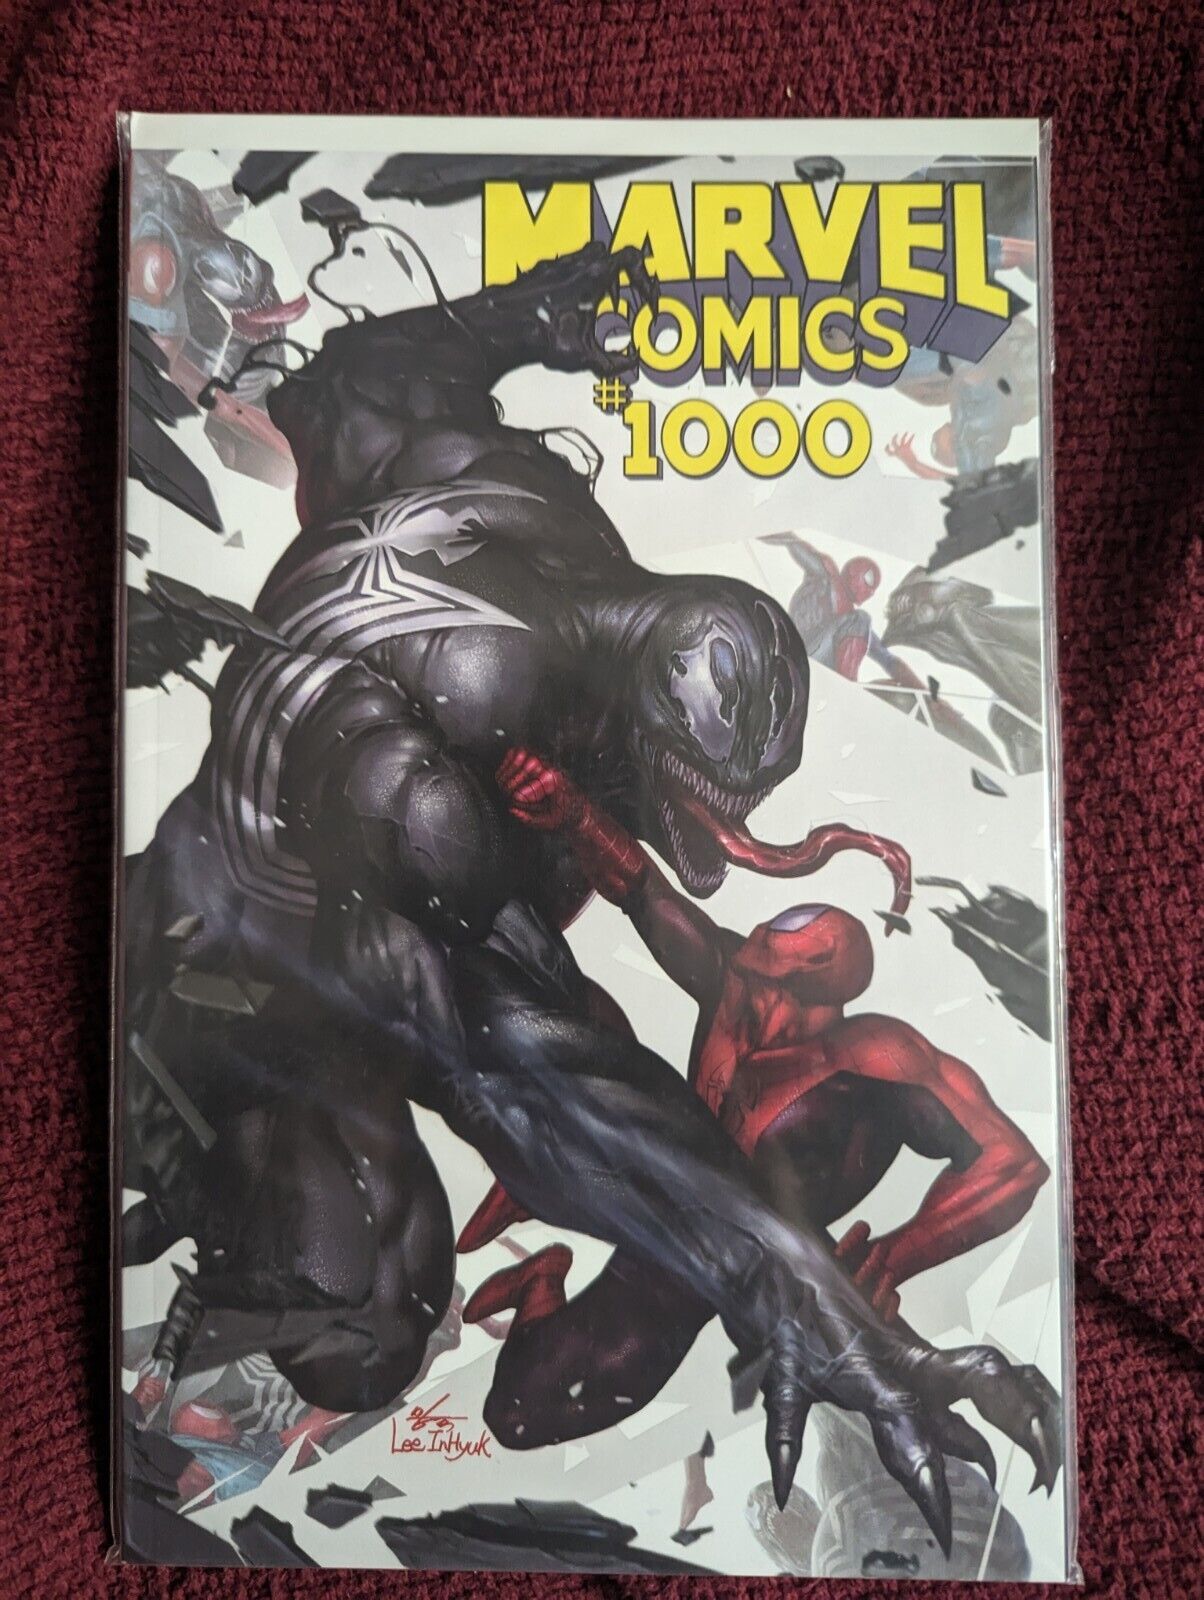 Marvel Comics 1000 Spider-Man Versus Venom Variant